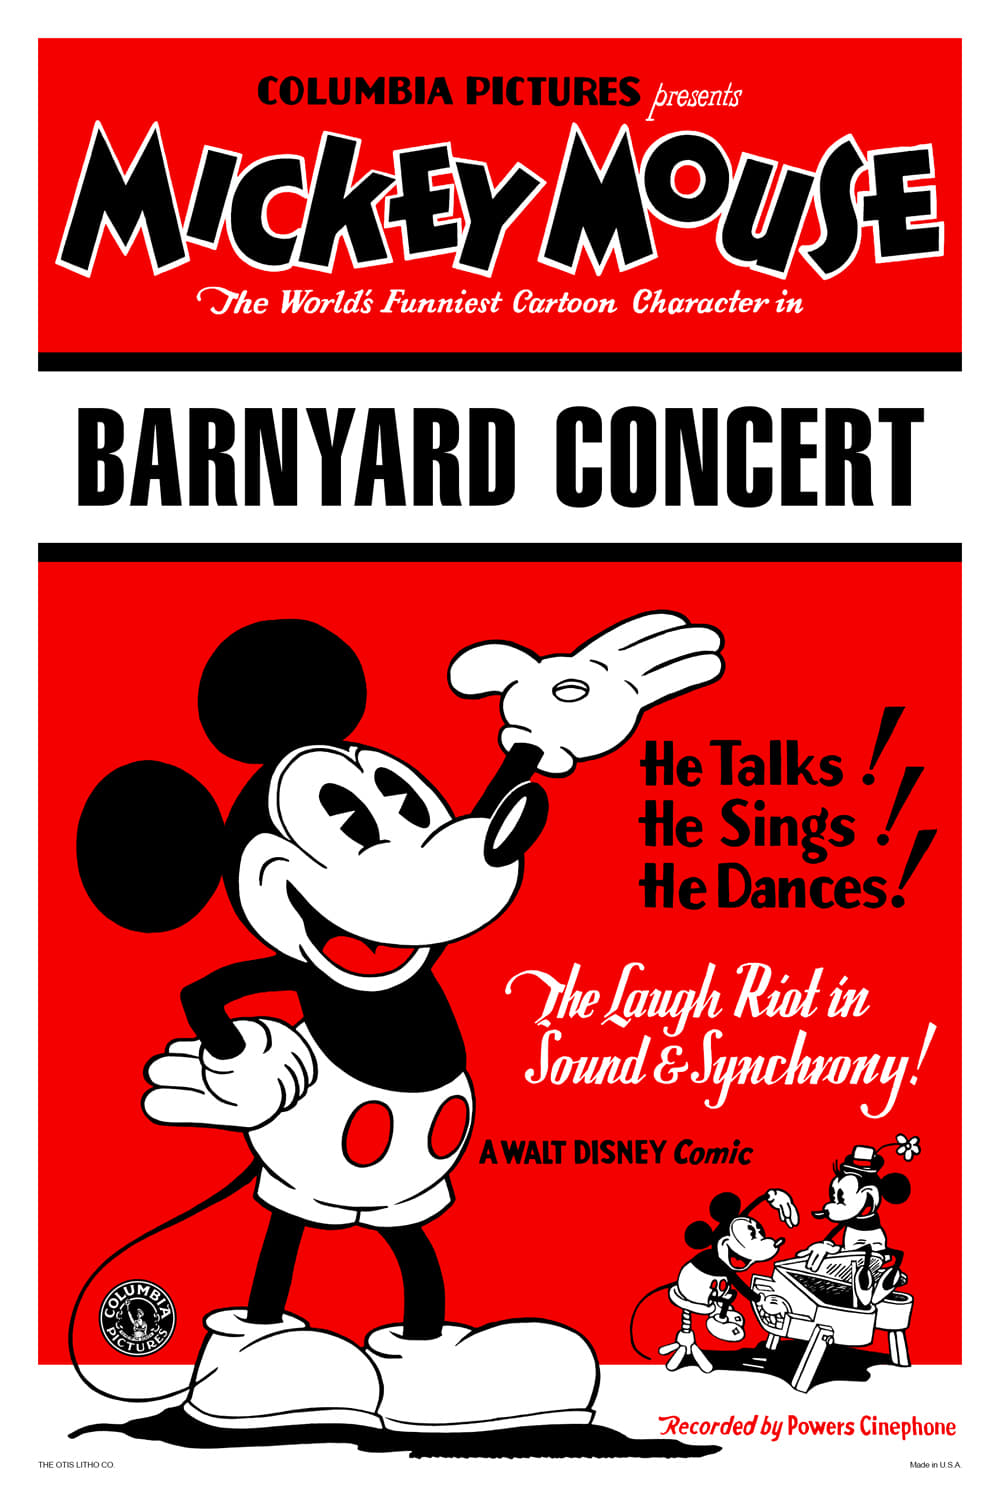 The Barnyard Concert